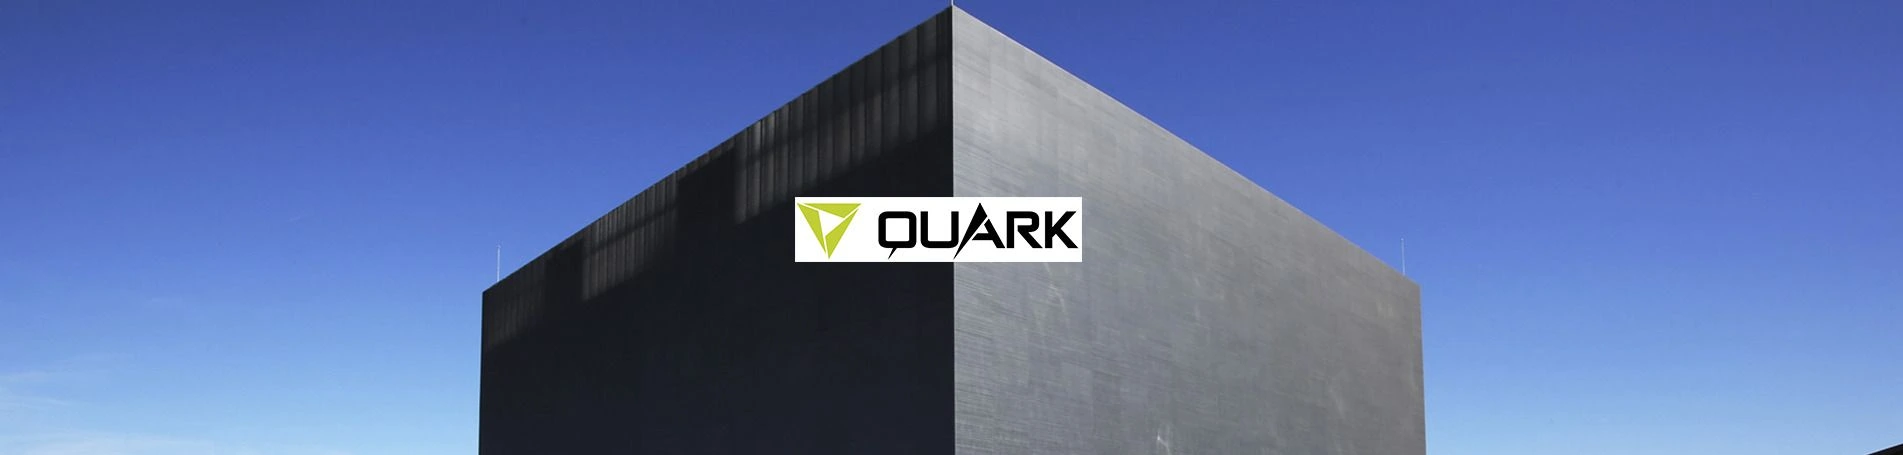 Nueva página web para Quark